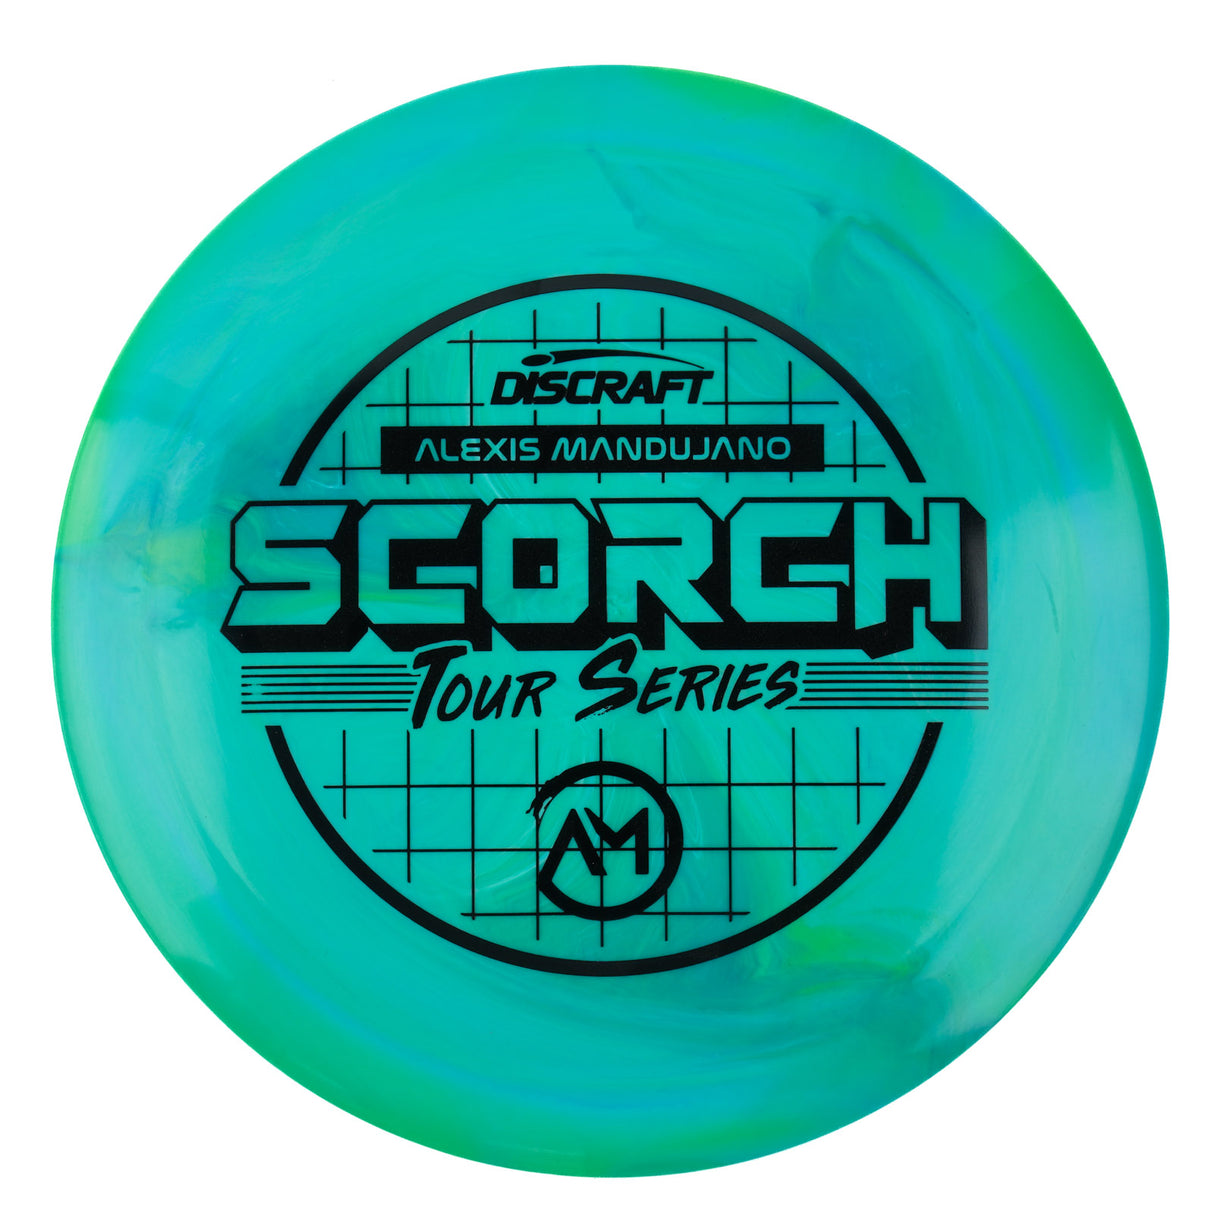 Discraft Scorch - Alexis Mandujano Tour Series ESP 173g | Style 0002